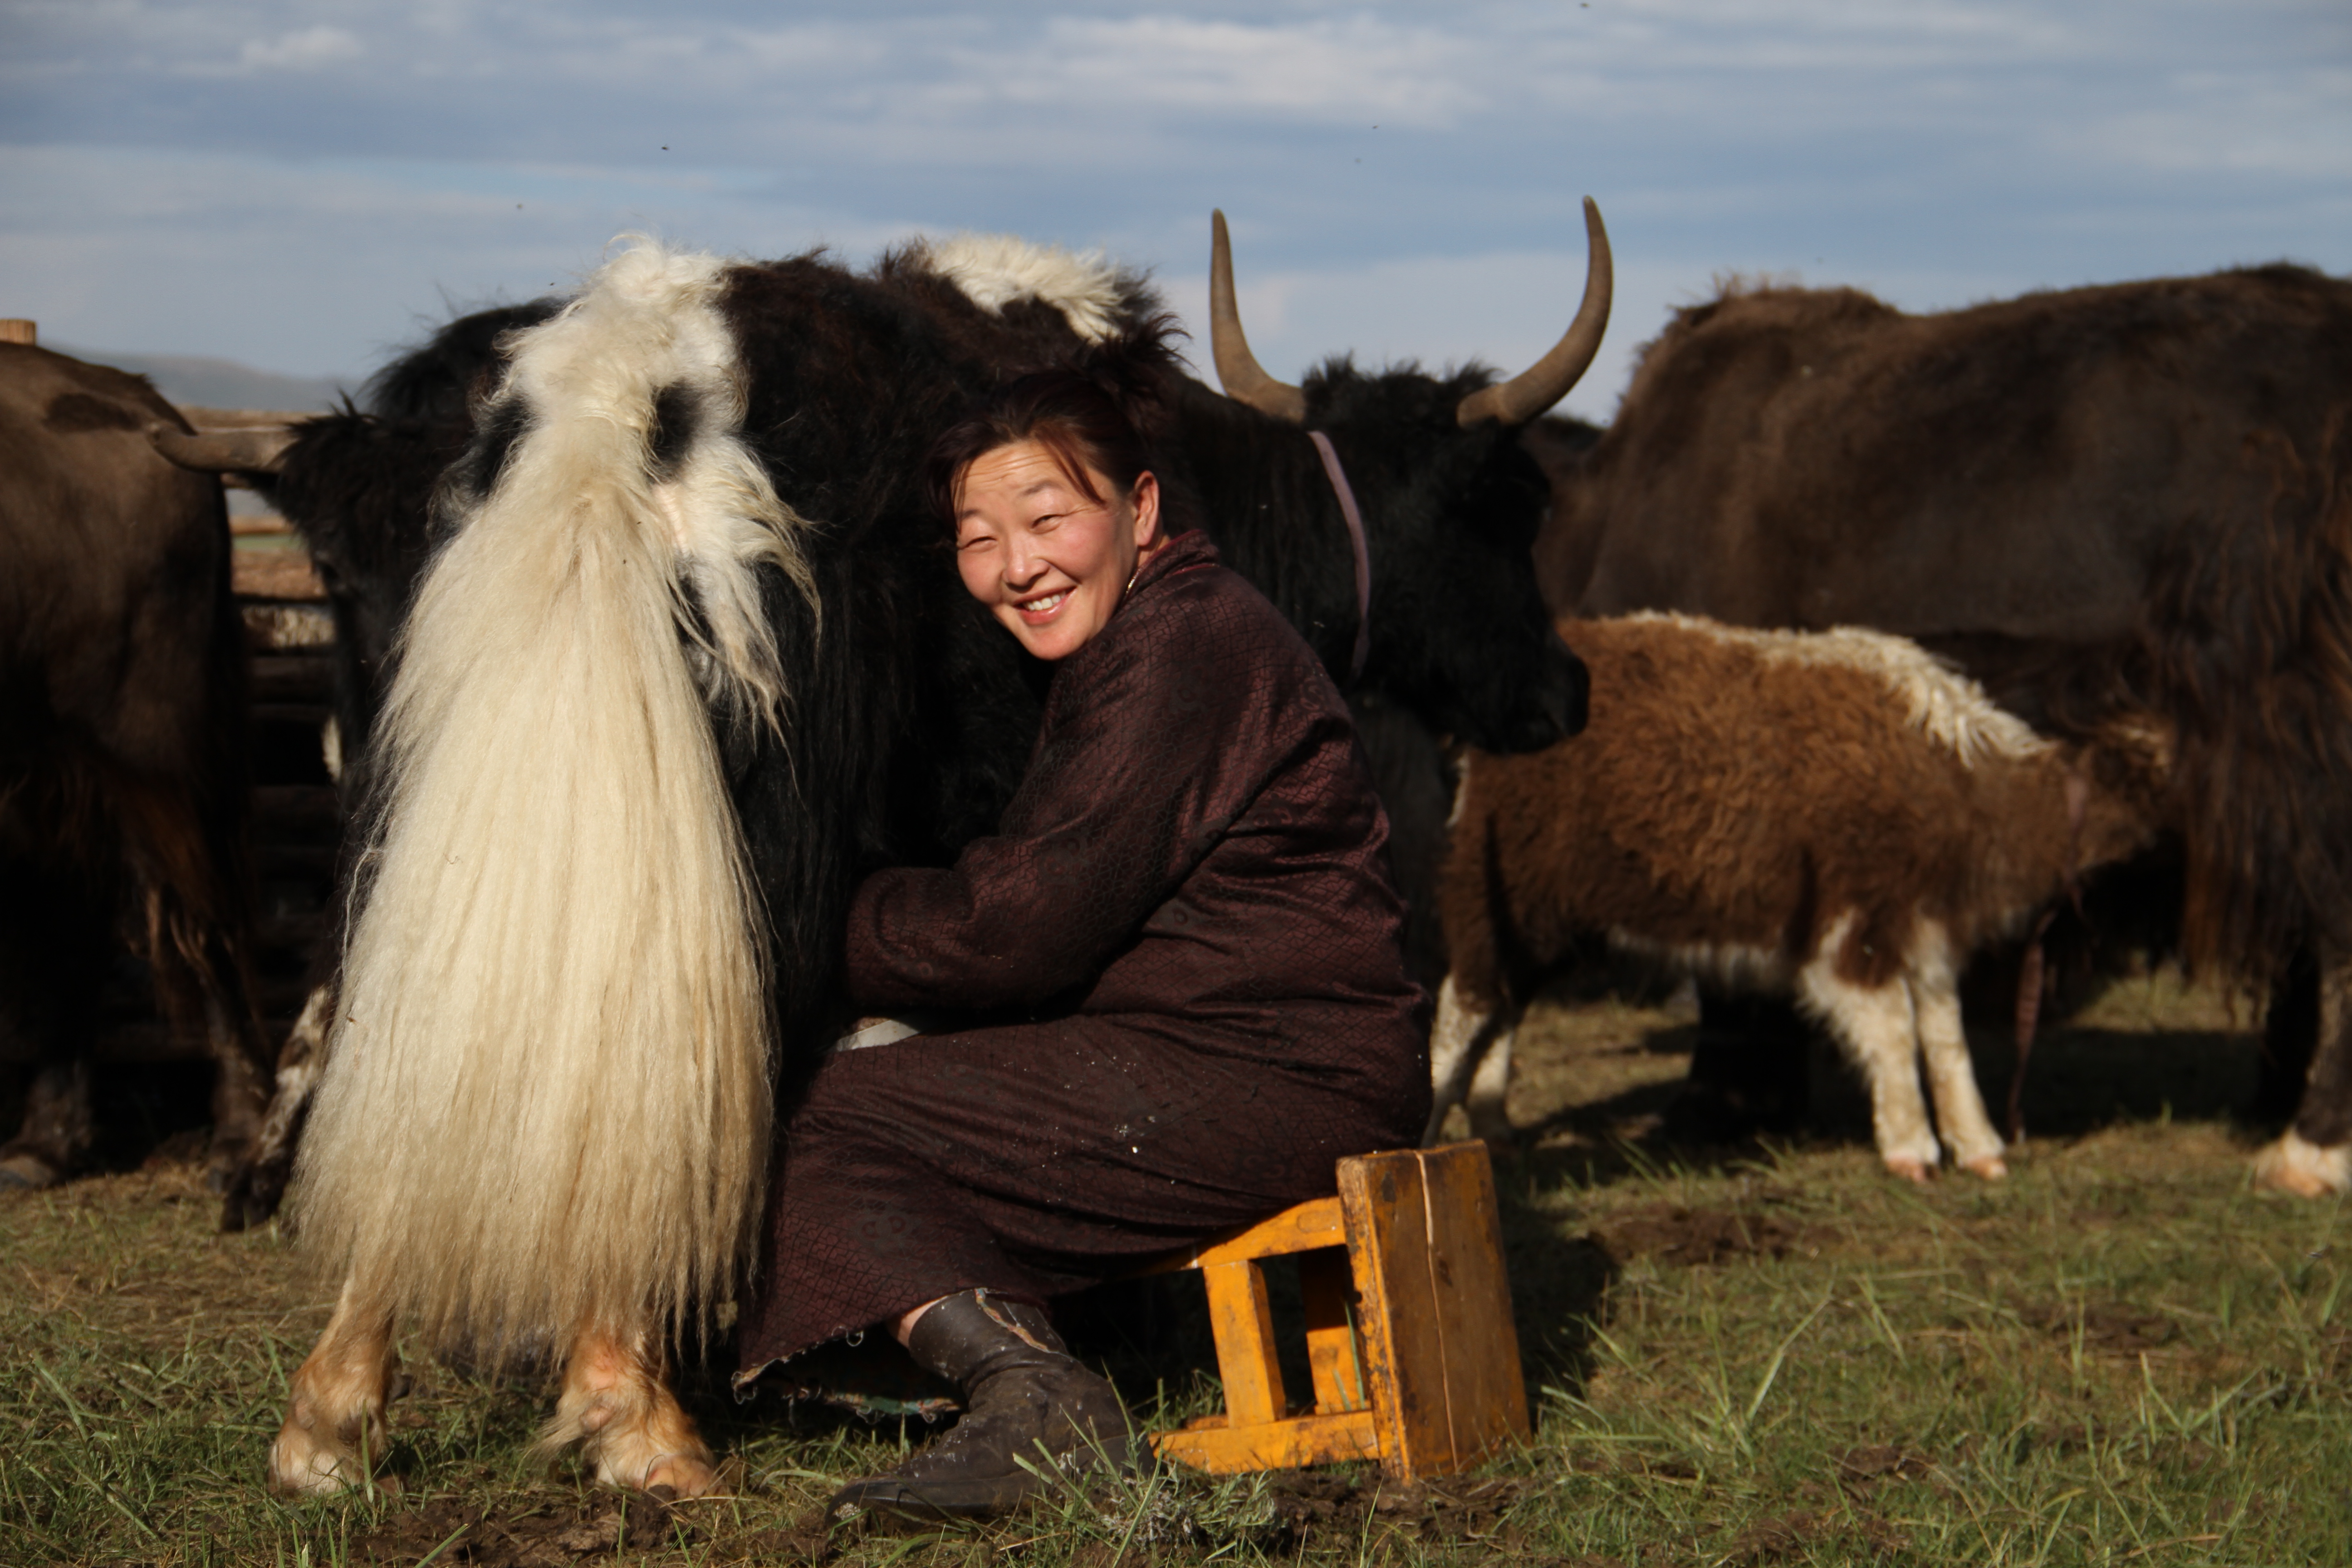 Un’allevatrice seduta su uno sgabello munge uno yak.